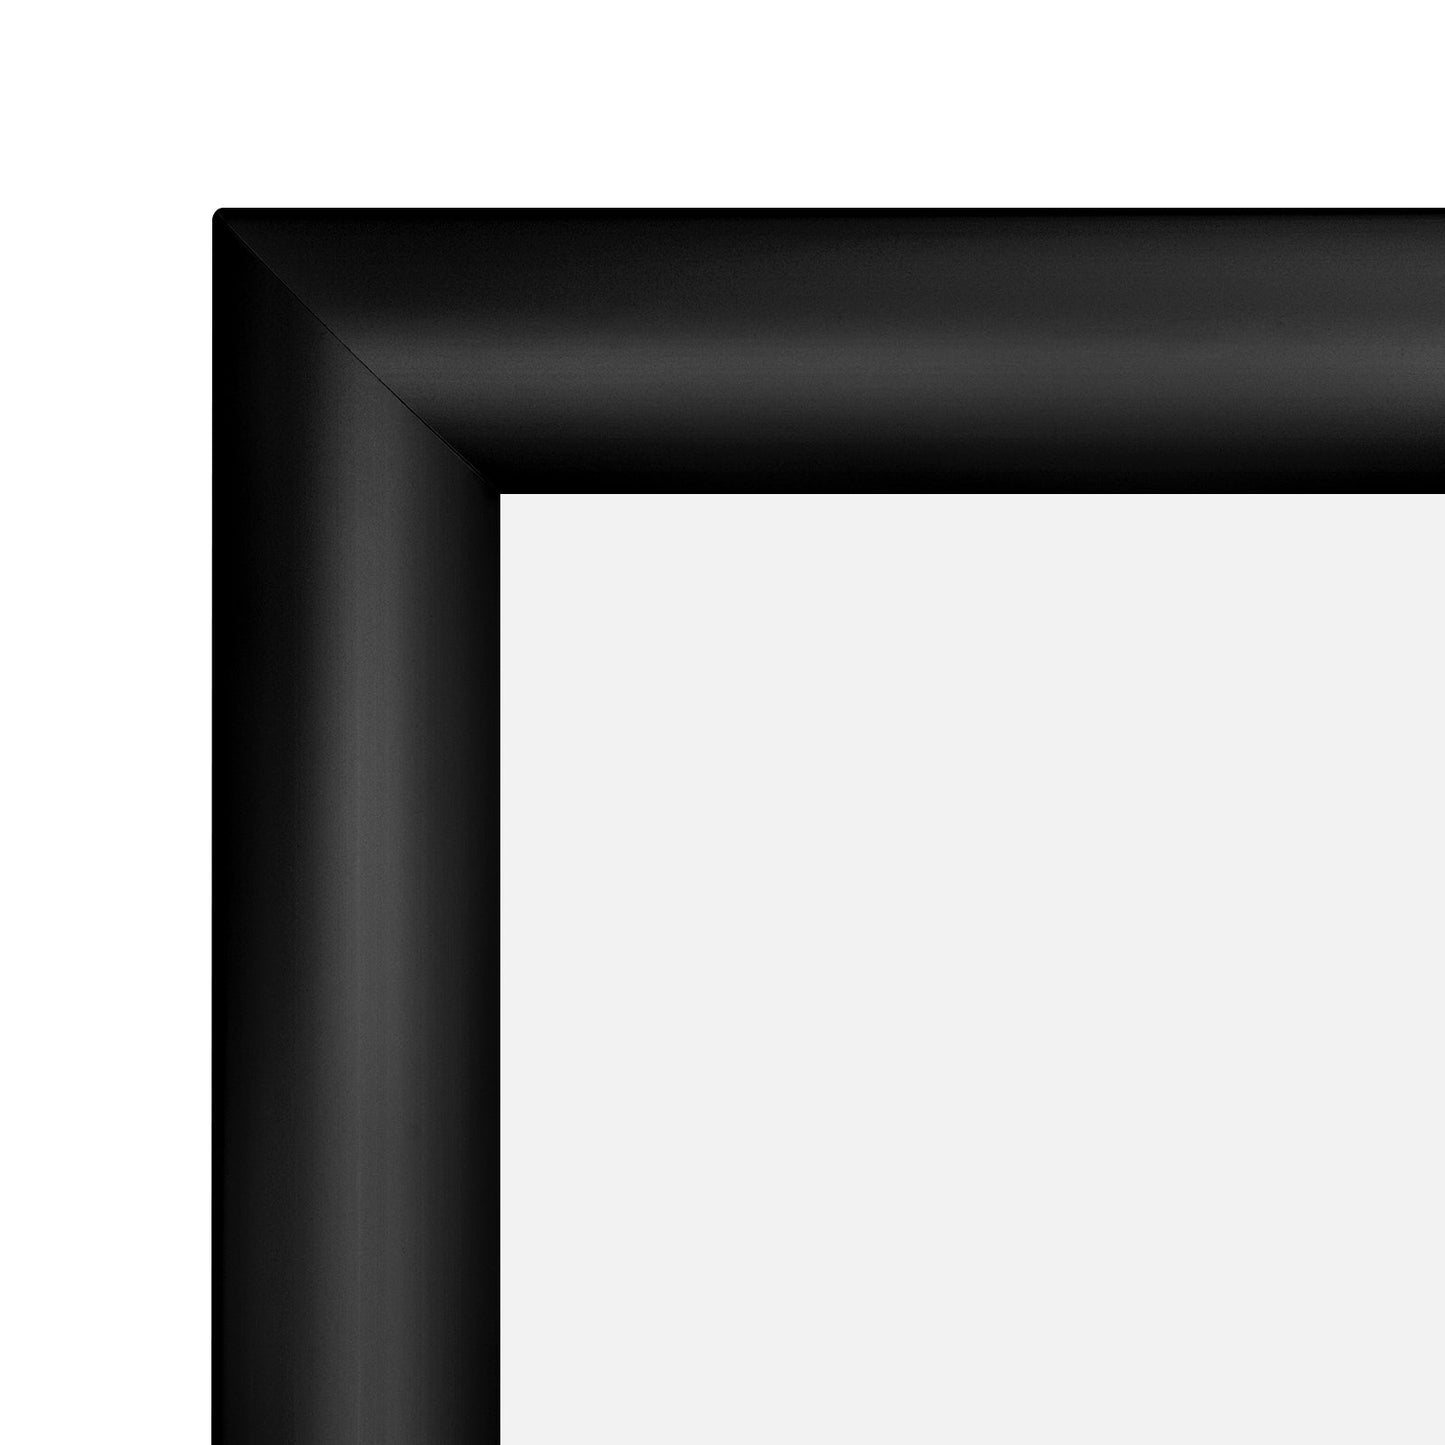 20x29 Black SnapeZo® Snap Frame - 1.2" Profile - Snap Frames Direct